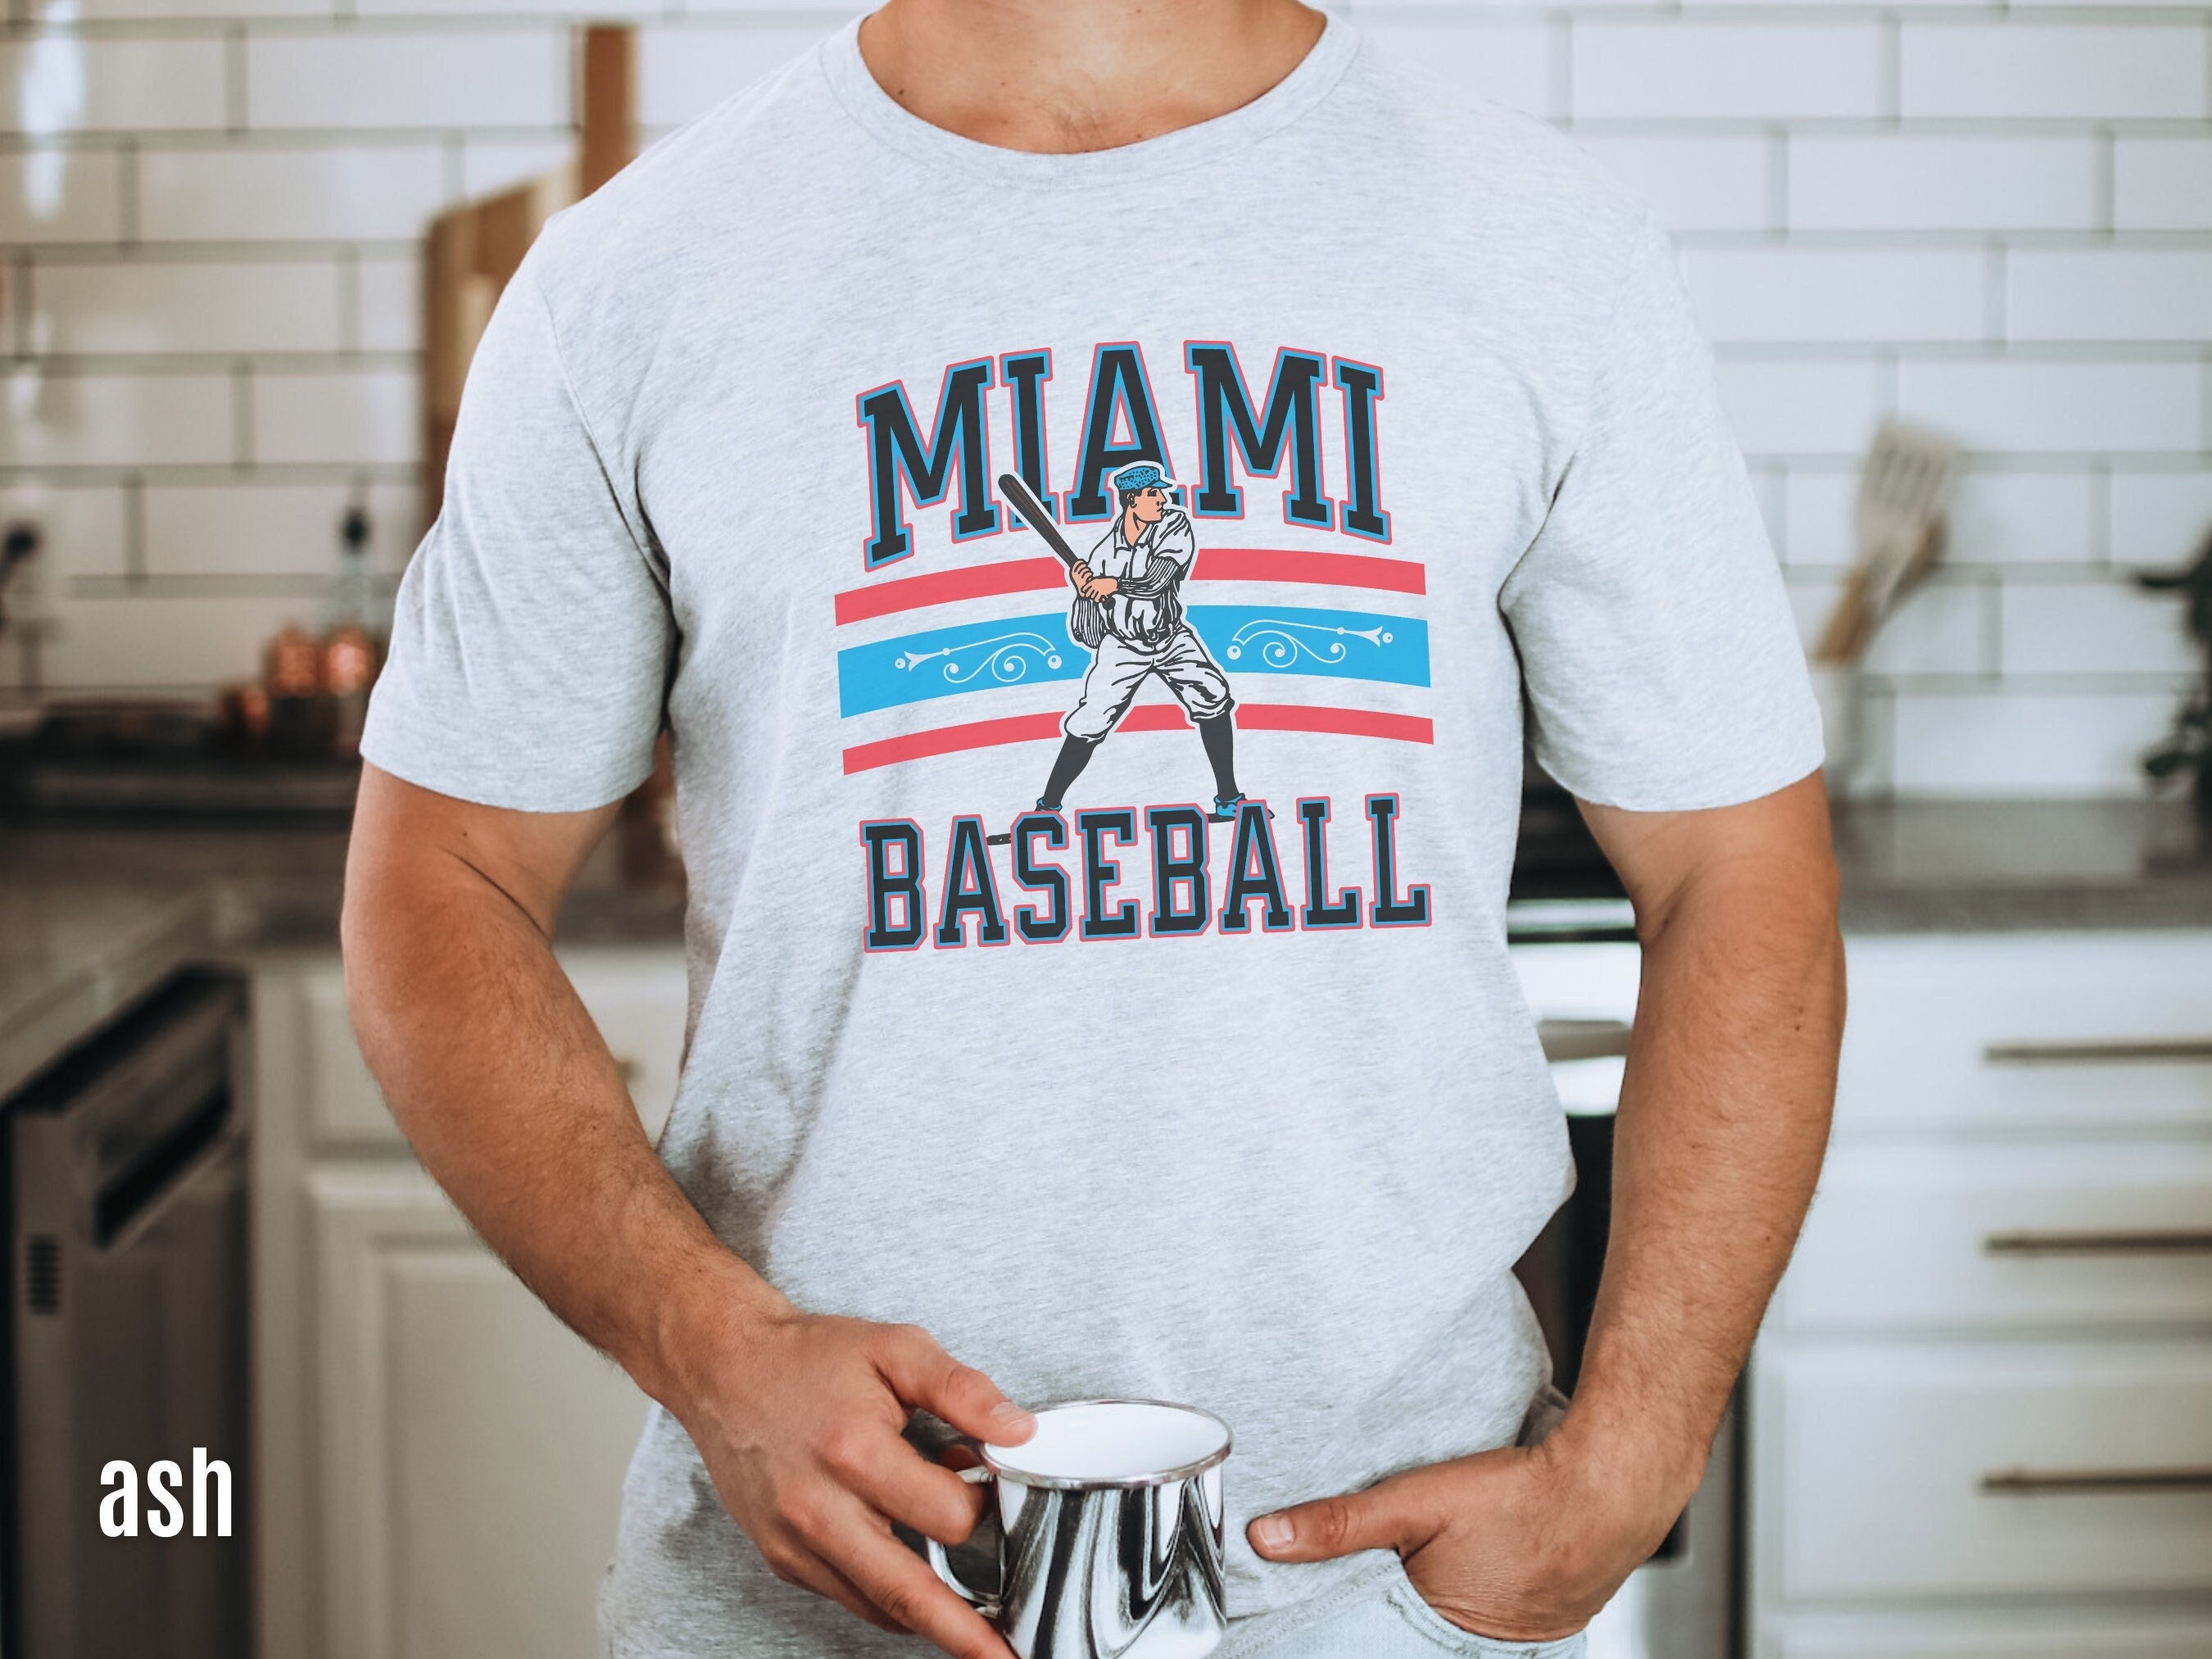 LockerRoomG Miami Baseball Player Shirt, Retro 90s Throwback Shirt, Vintage Style Base Ball T-Shirt, Gameday Apparel, Mia Sports Fan Gift Idea